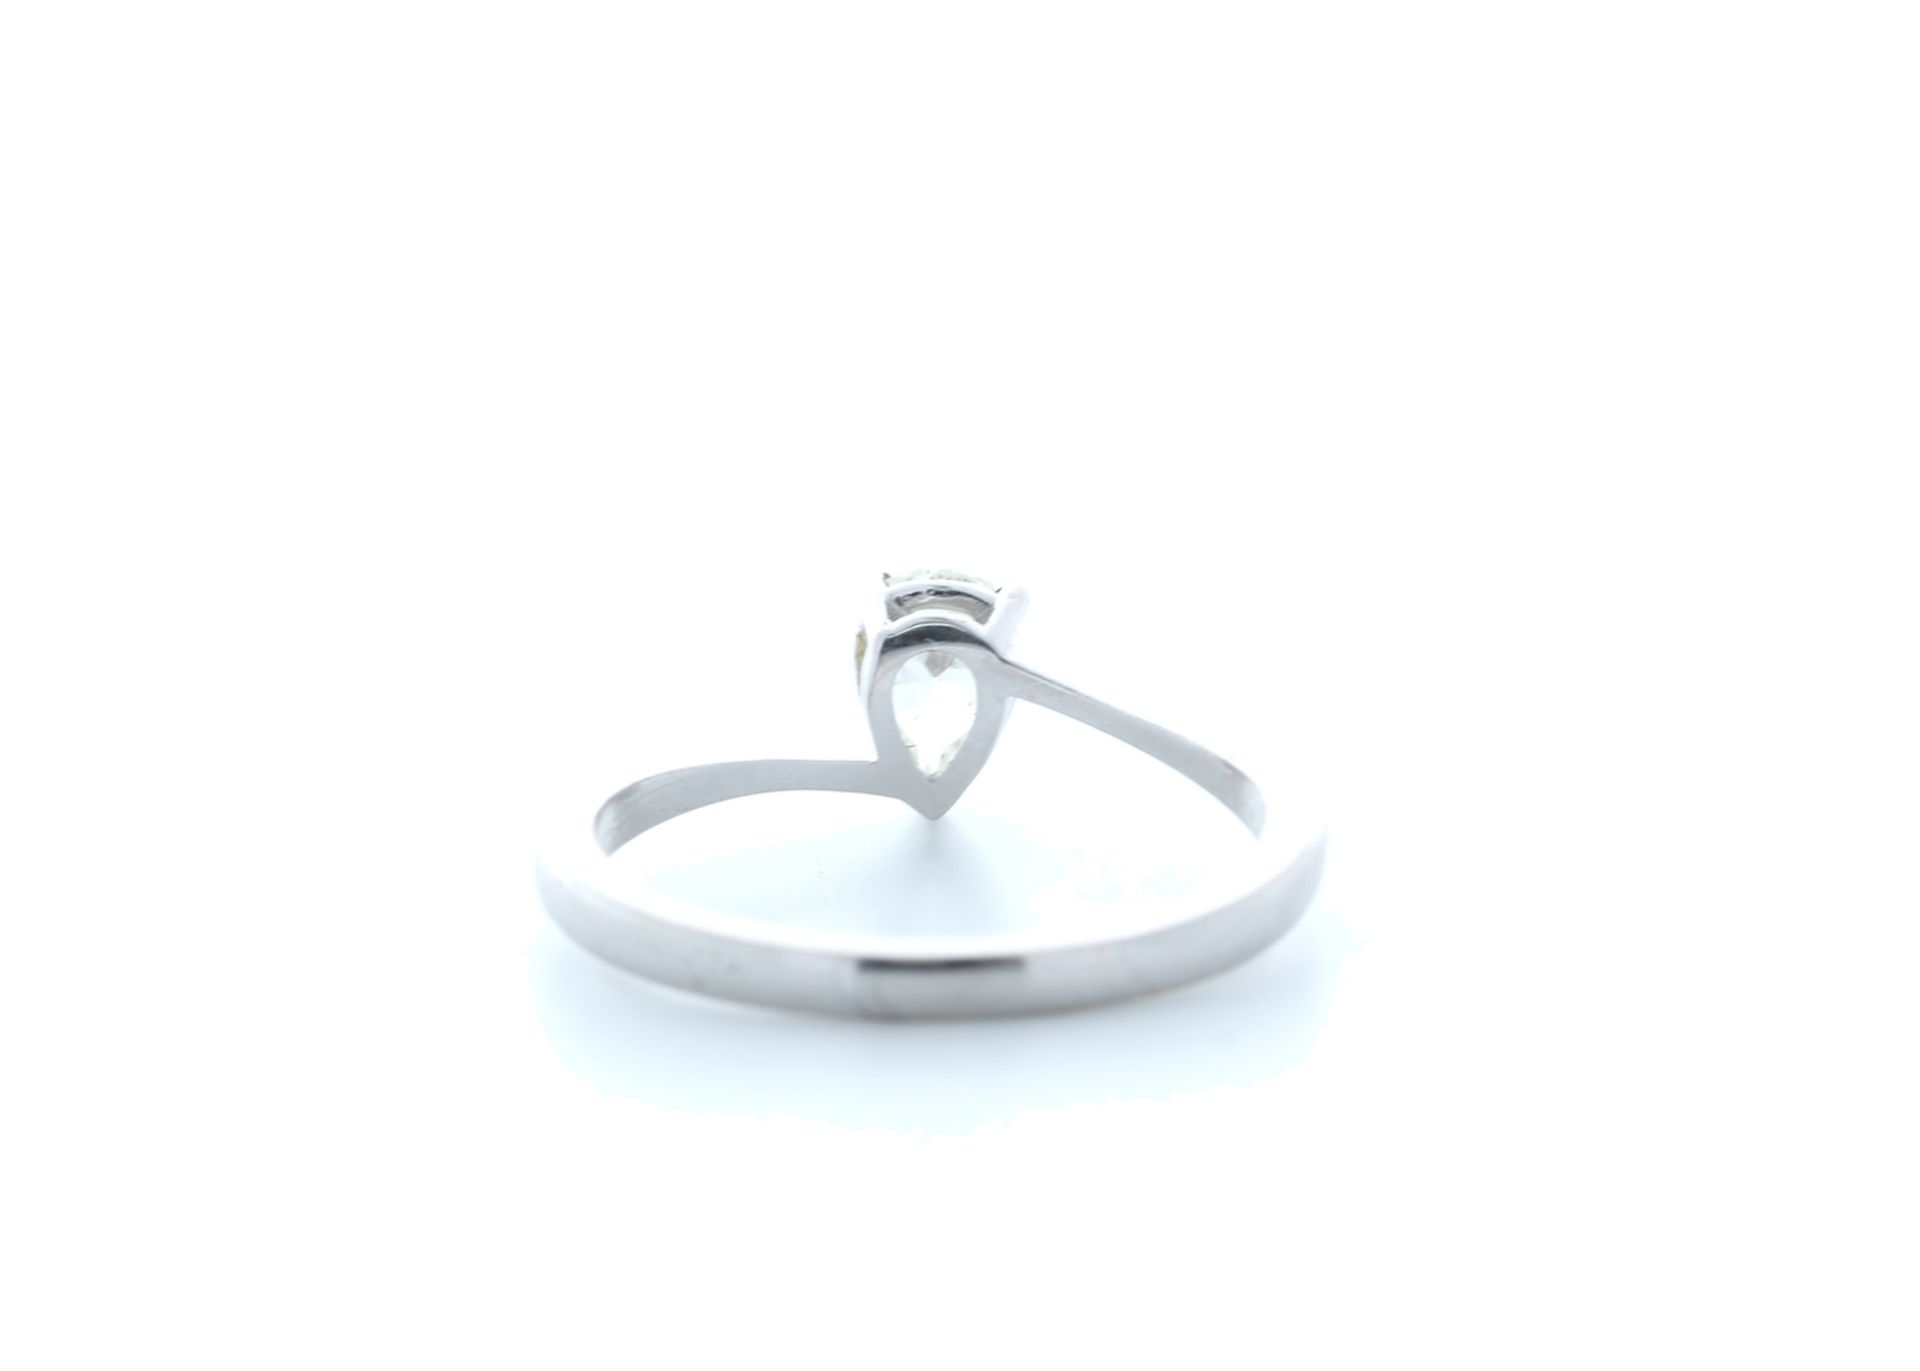 18ct White Gold Single Stone Prong Set Diamond Ring 0.38 Carats - Valued by IDI £3,000.00 - 18ct - Image 3 of 5